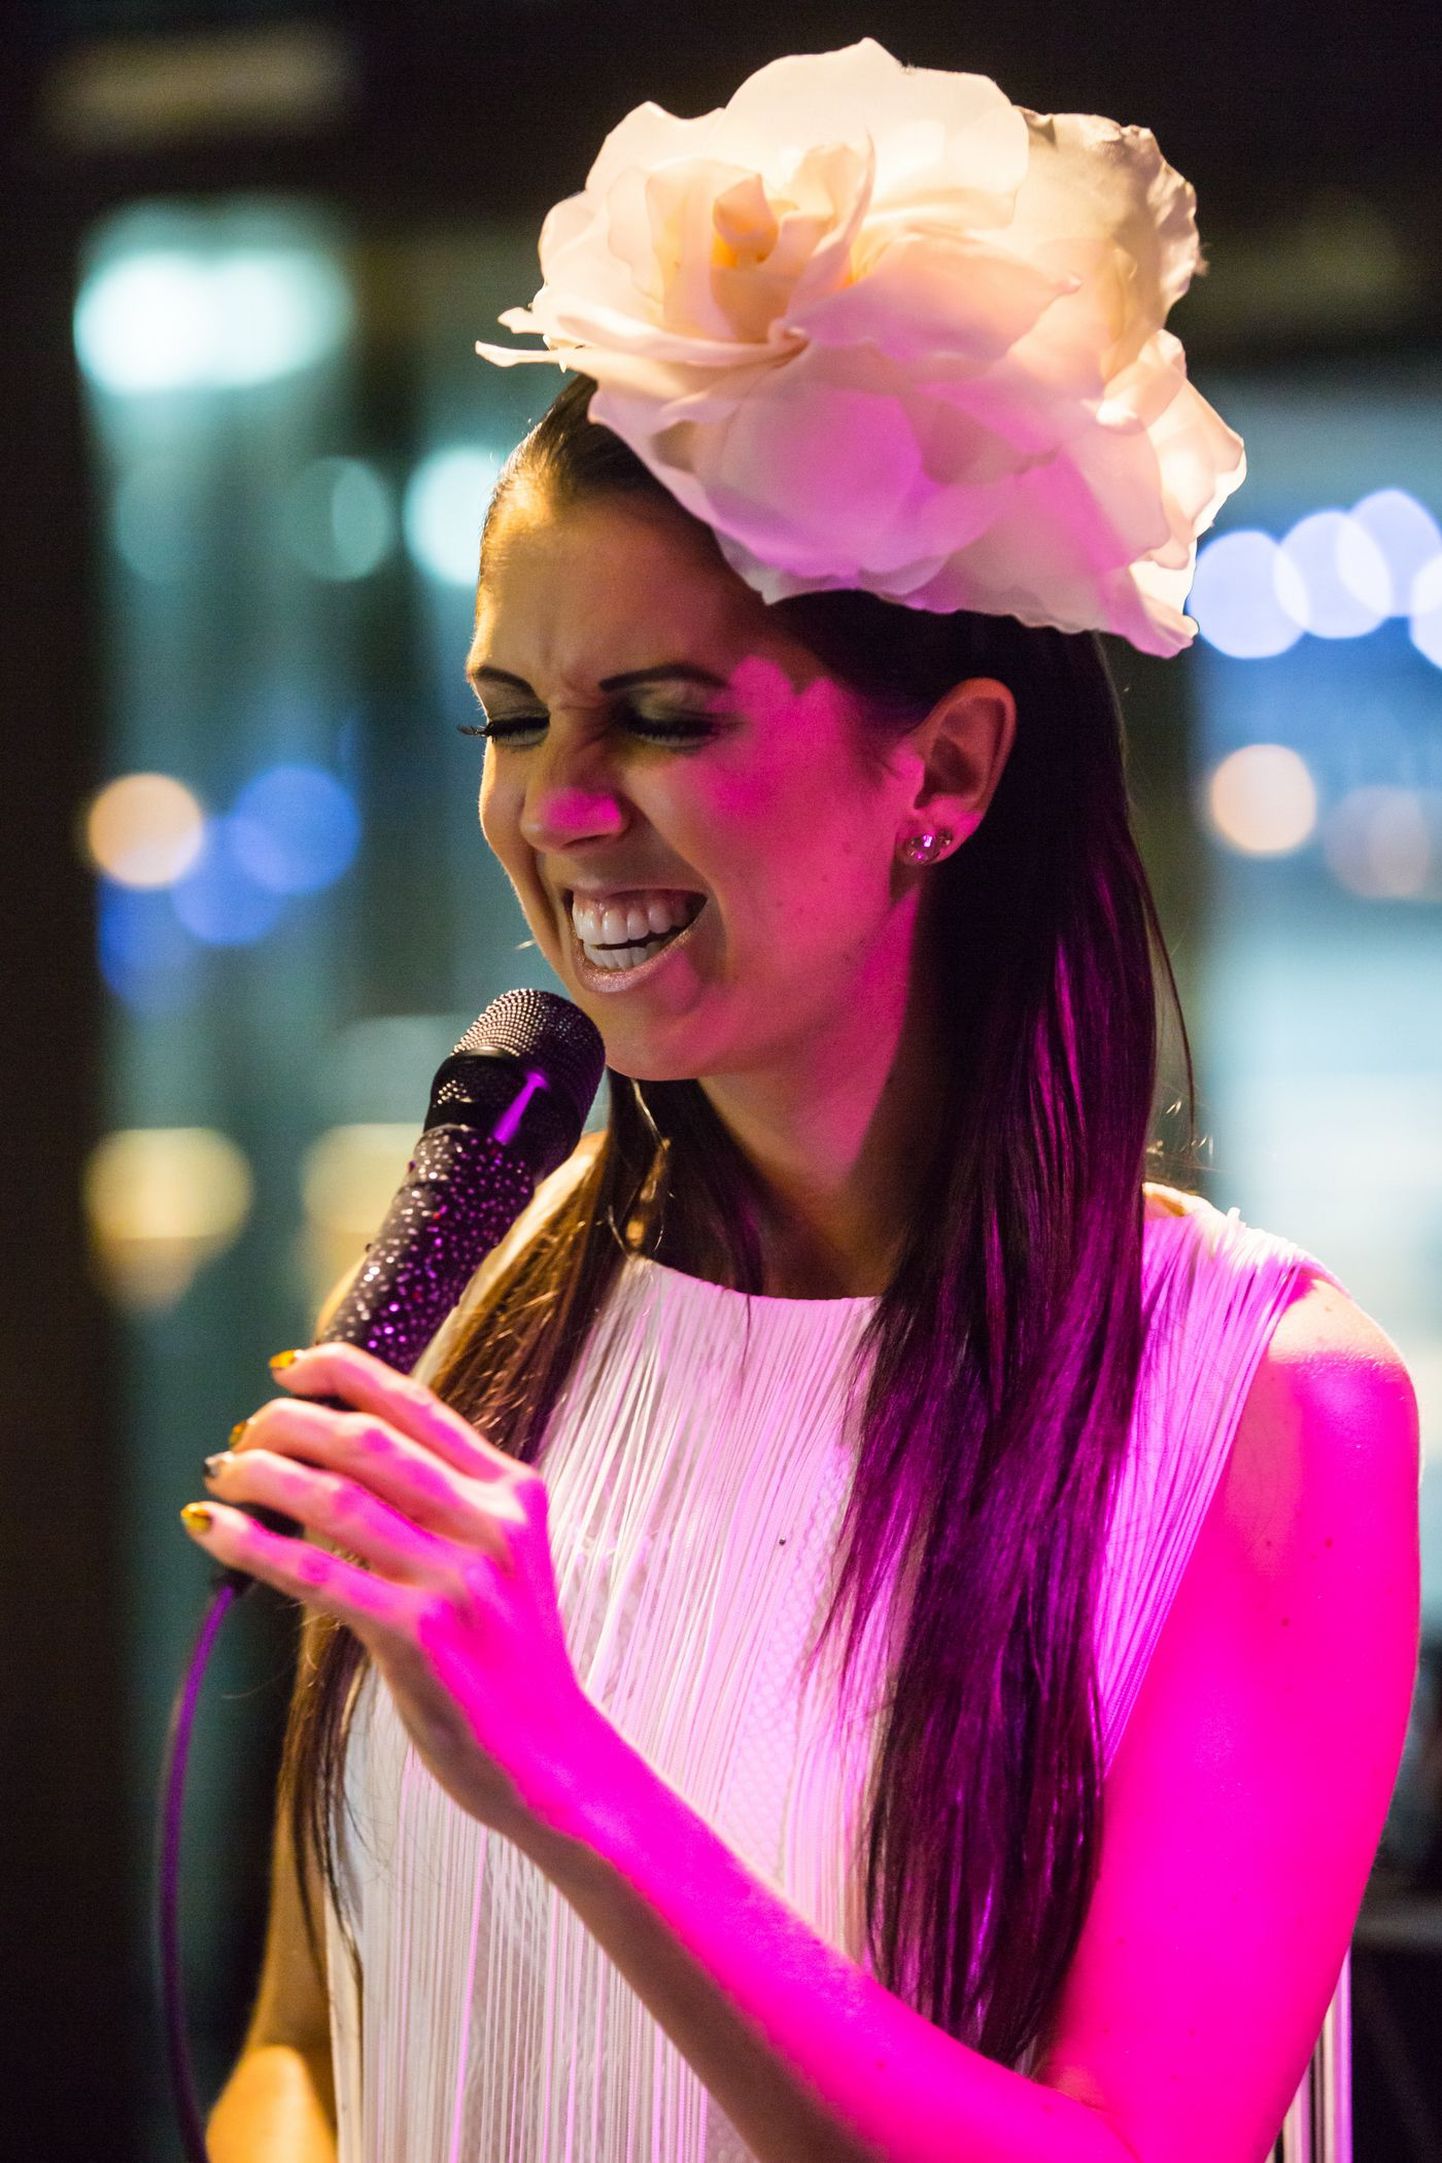 Laura kontsert meelitas Viru Cafe Lyoni rekordarvu fänne